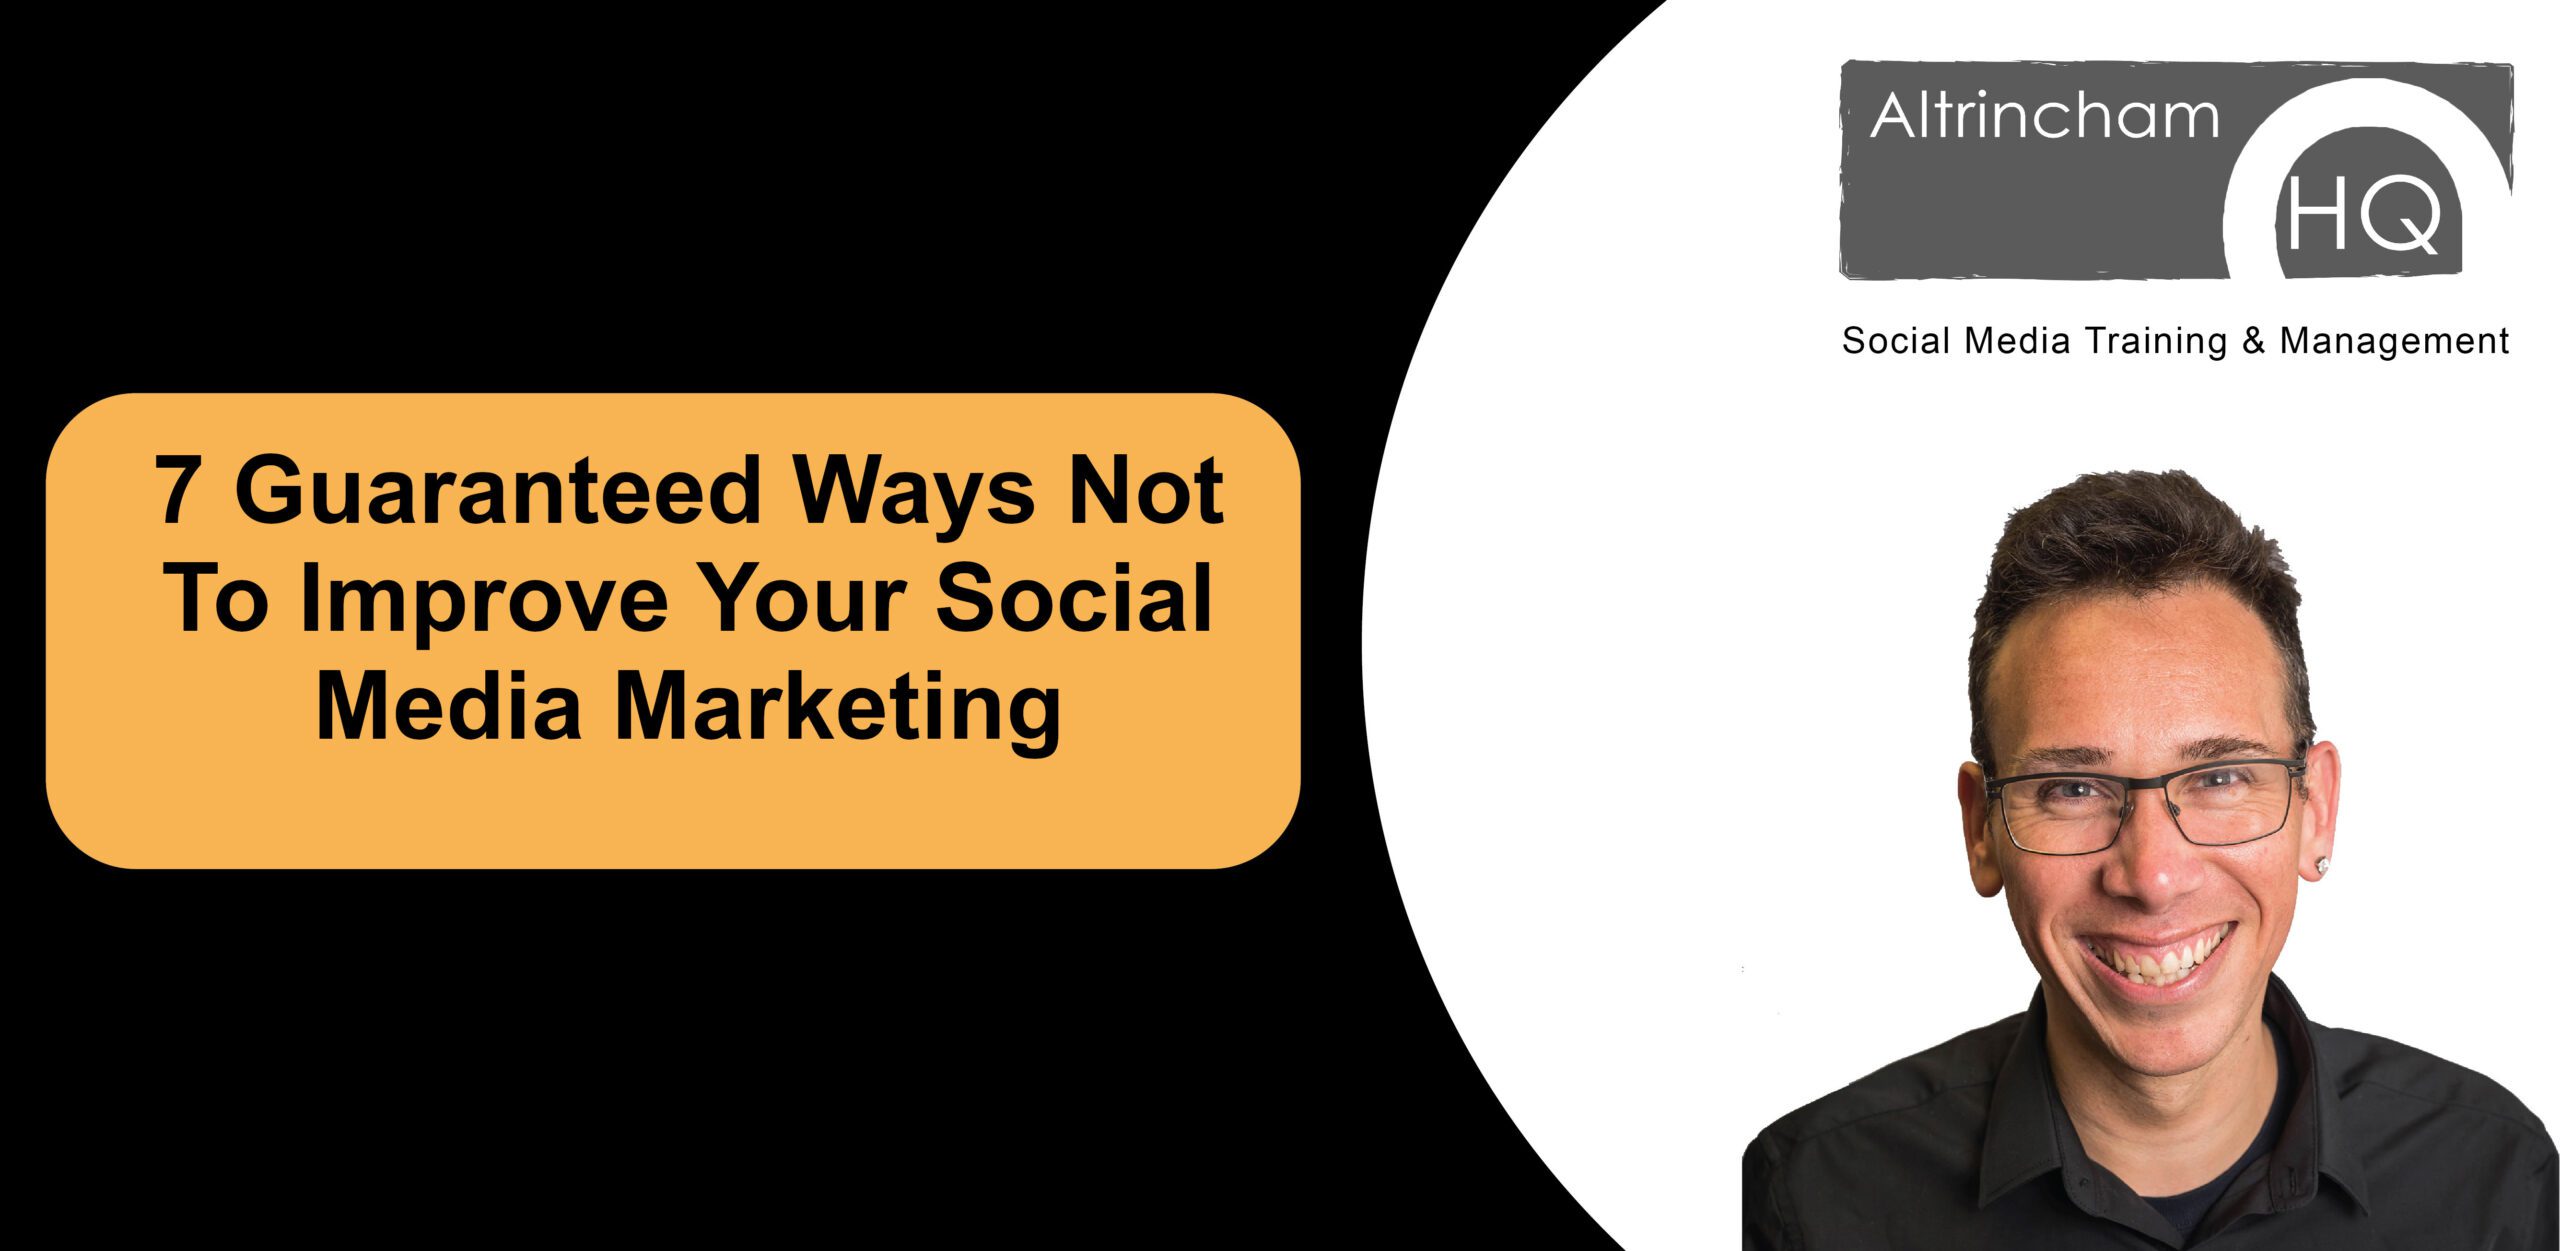 7 Guaranteed Ways That You Won’t Improve Your Social Media Marketing